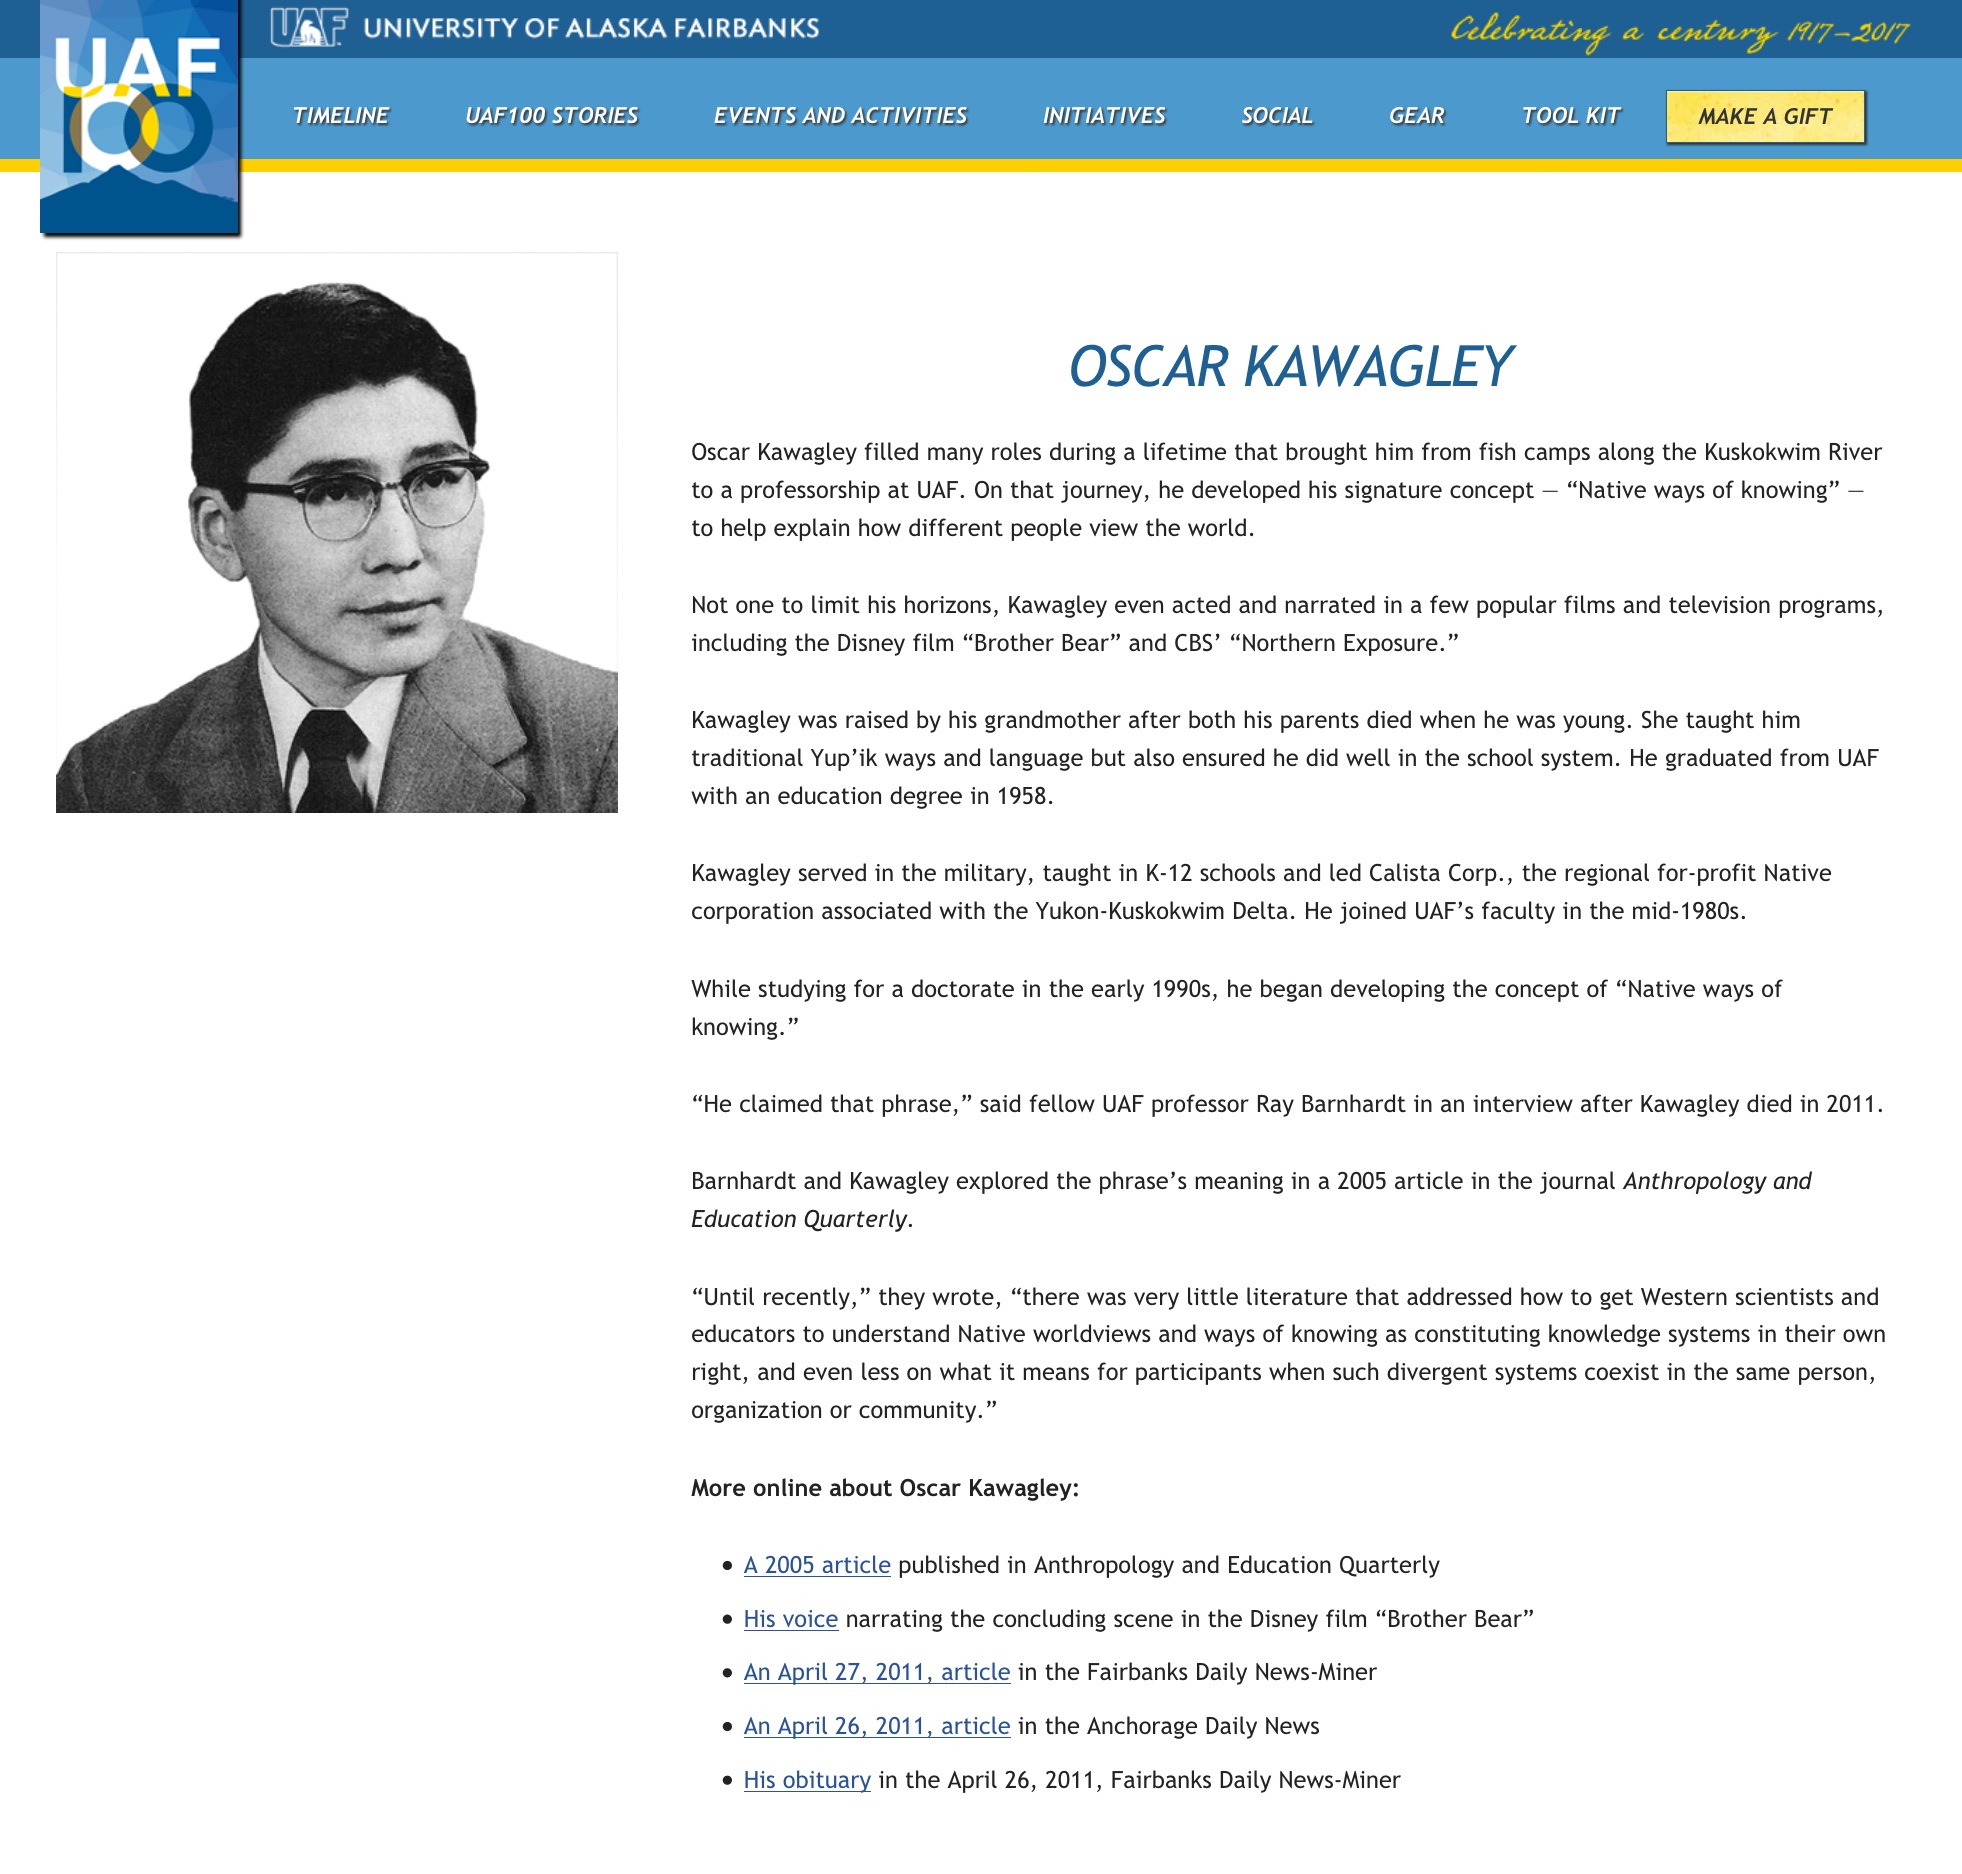 Oscar Kawagley story webpage